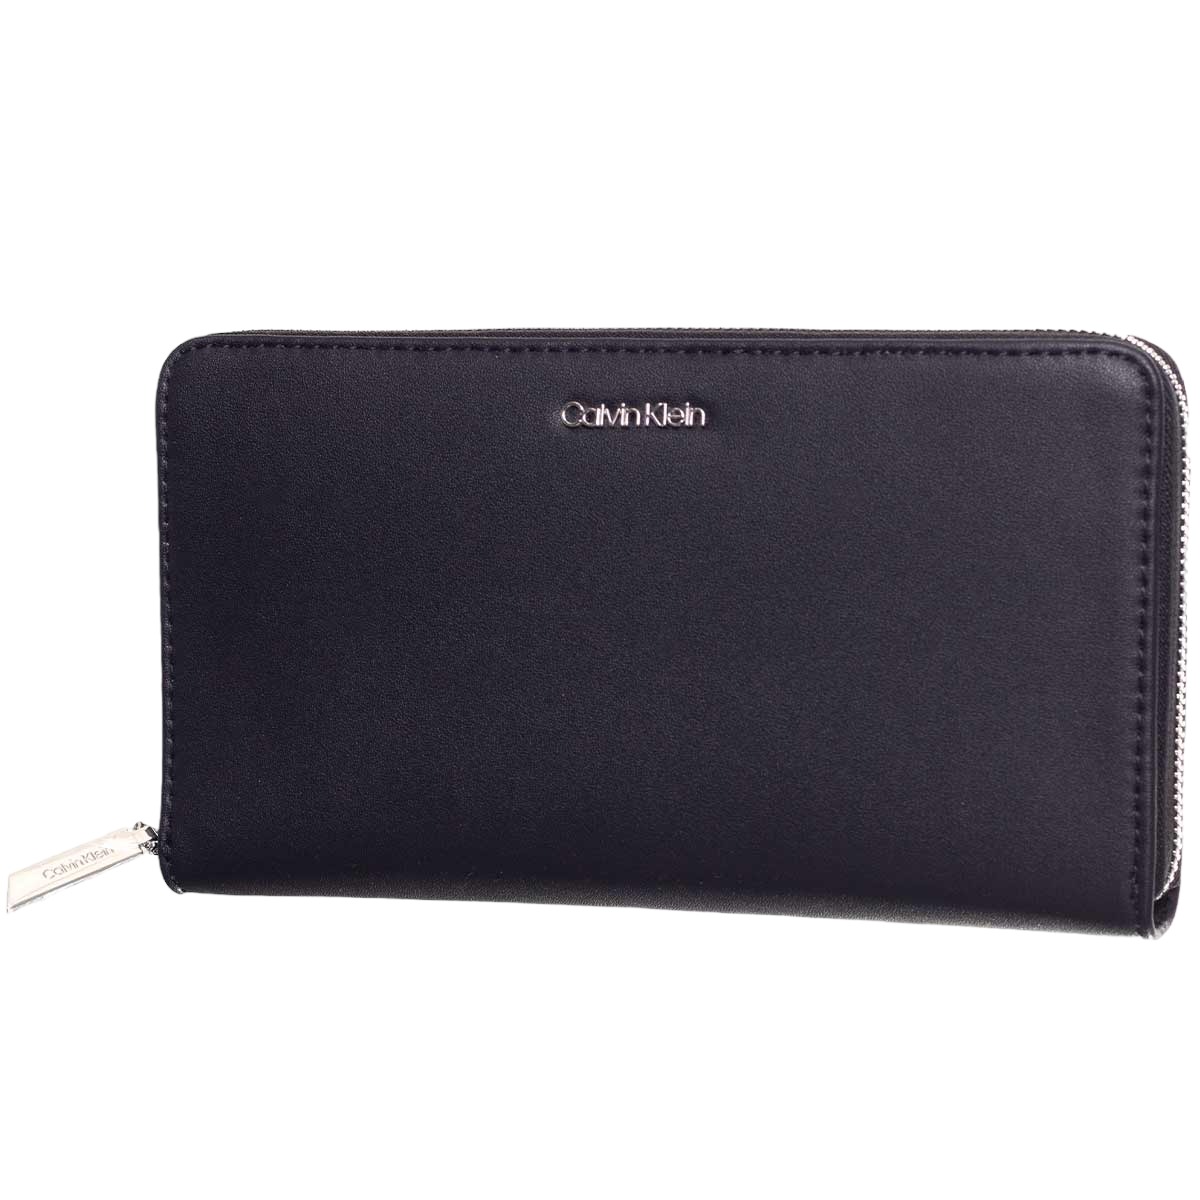 Calvin Klein Woman's Wallet 5905655074916